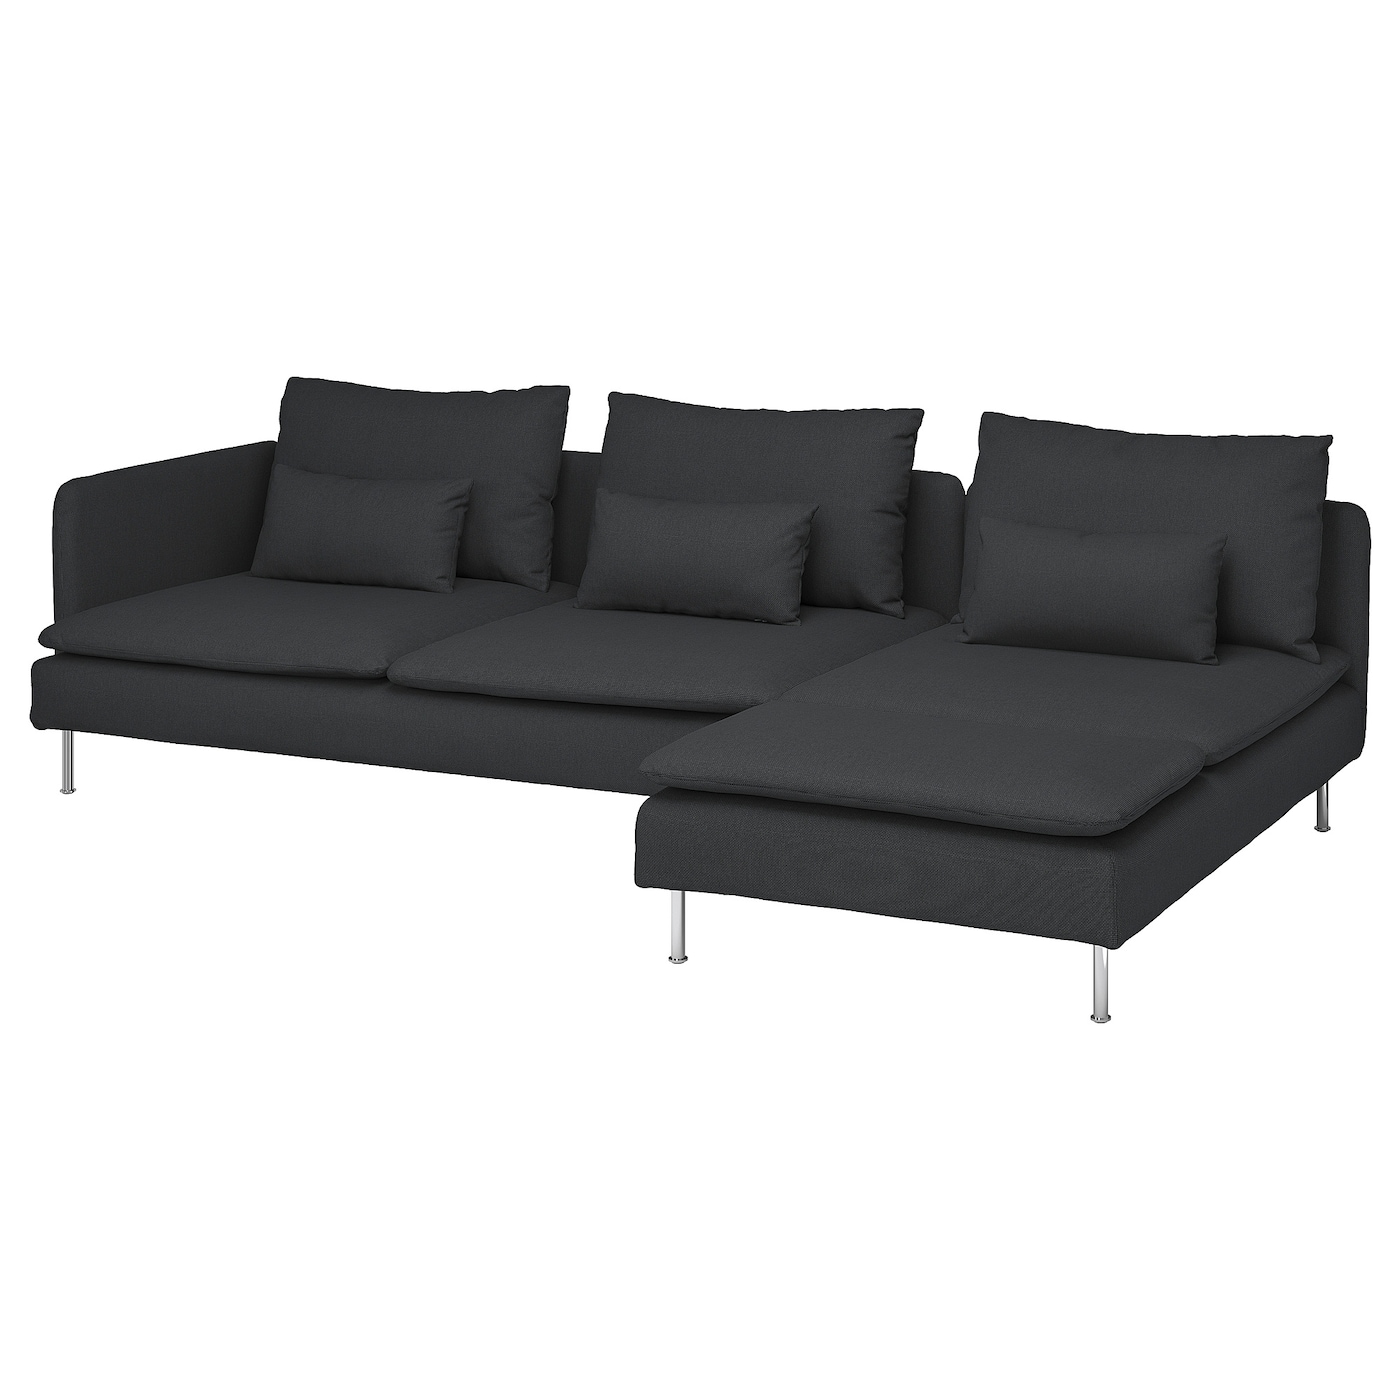 СЁДЕРХАМН 4-местный диван + диван, раскладной Фридтуна/темно-серый SODERHAMN IKEA диван раскладной конфетти